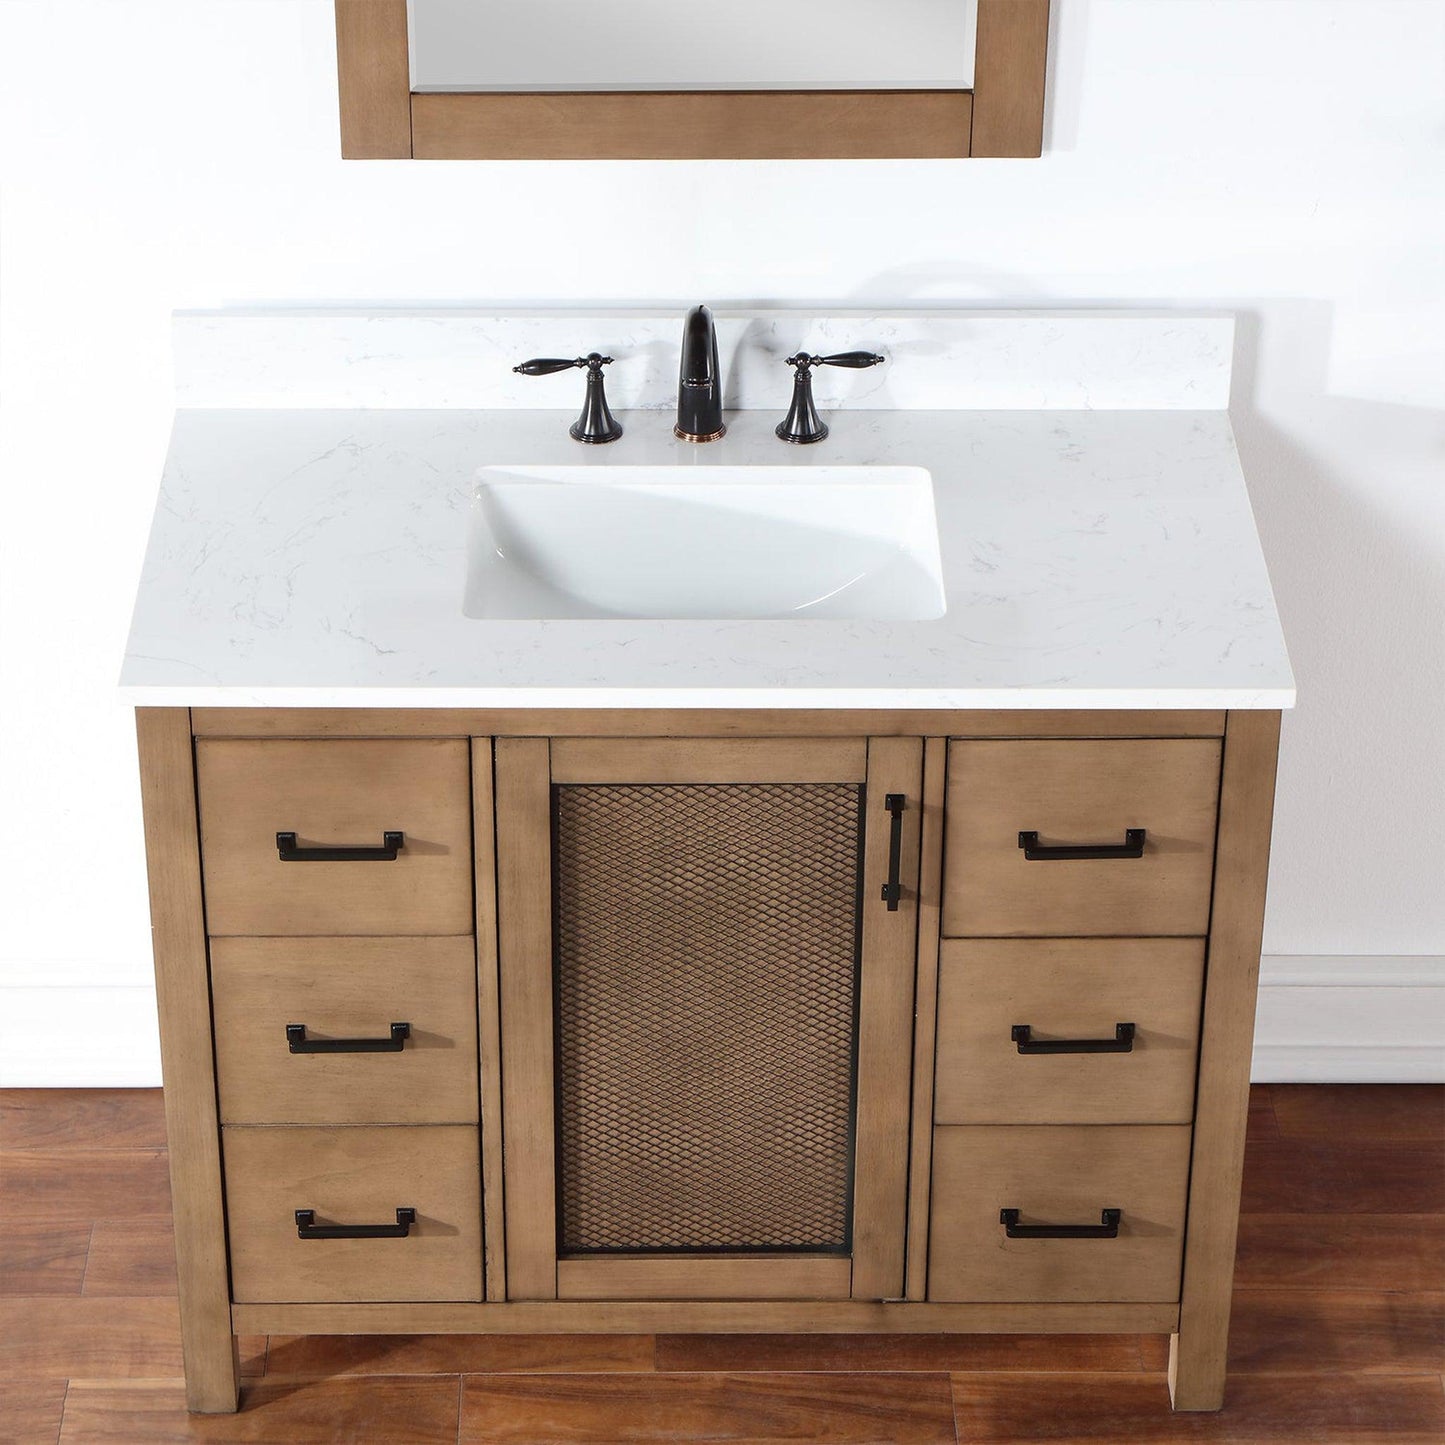 Altair Hadiya 42" Single Brown Pine Freestanding Bathroom Vanity Set With Mirror, Elegant Aosta White Composite Stone Top, Rectangular Undermount Ceramic Sink, Overflow, and Backsplash